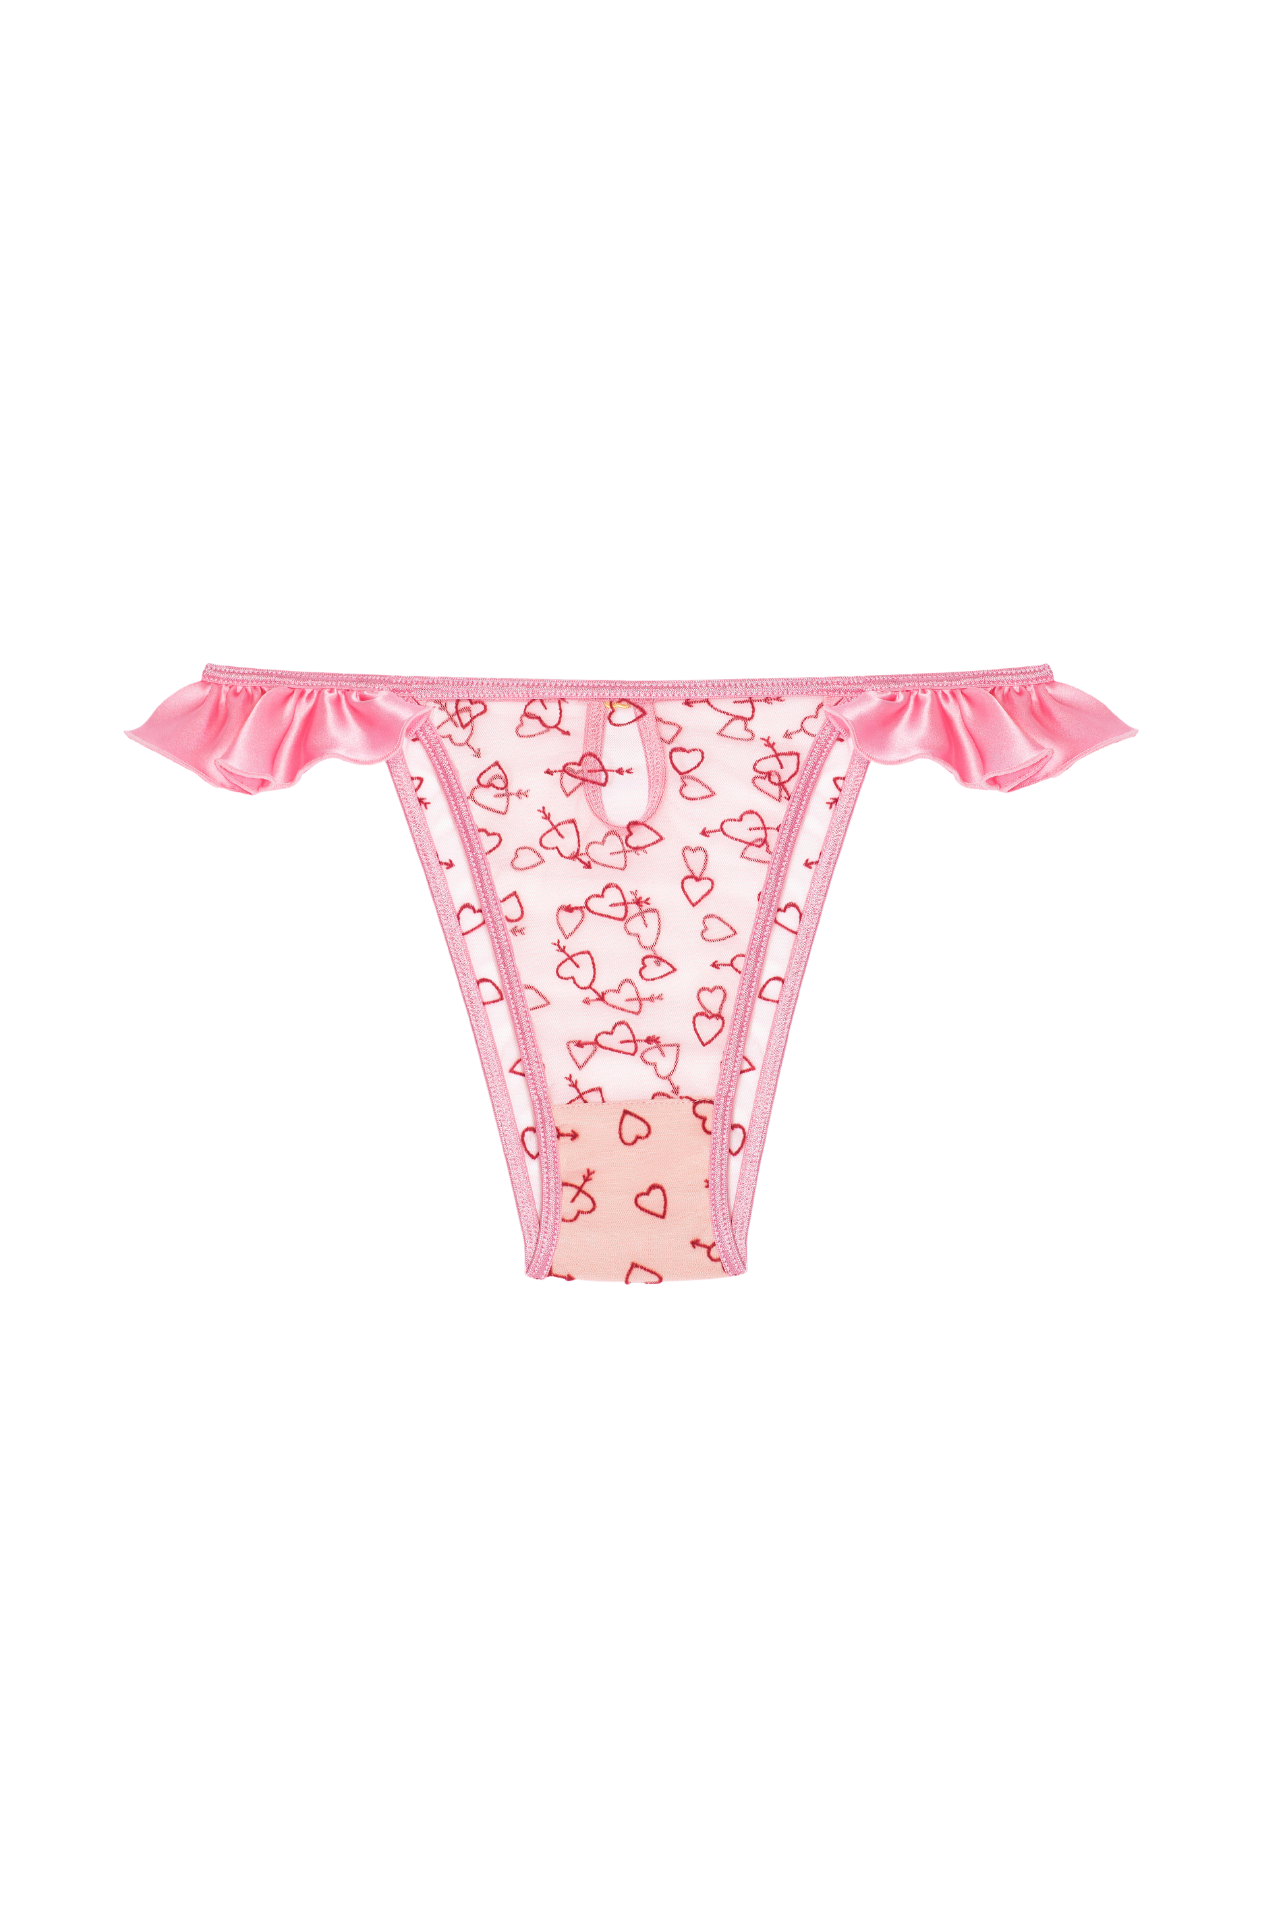 Rose ruffled romantic bouquet Brazilian panty, Le Petit Trou, Shop  Brazilian Panties Online